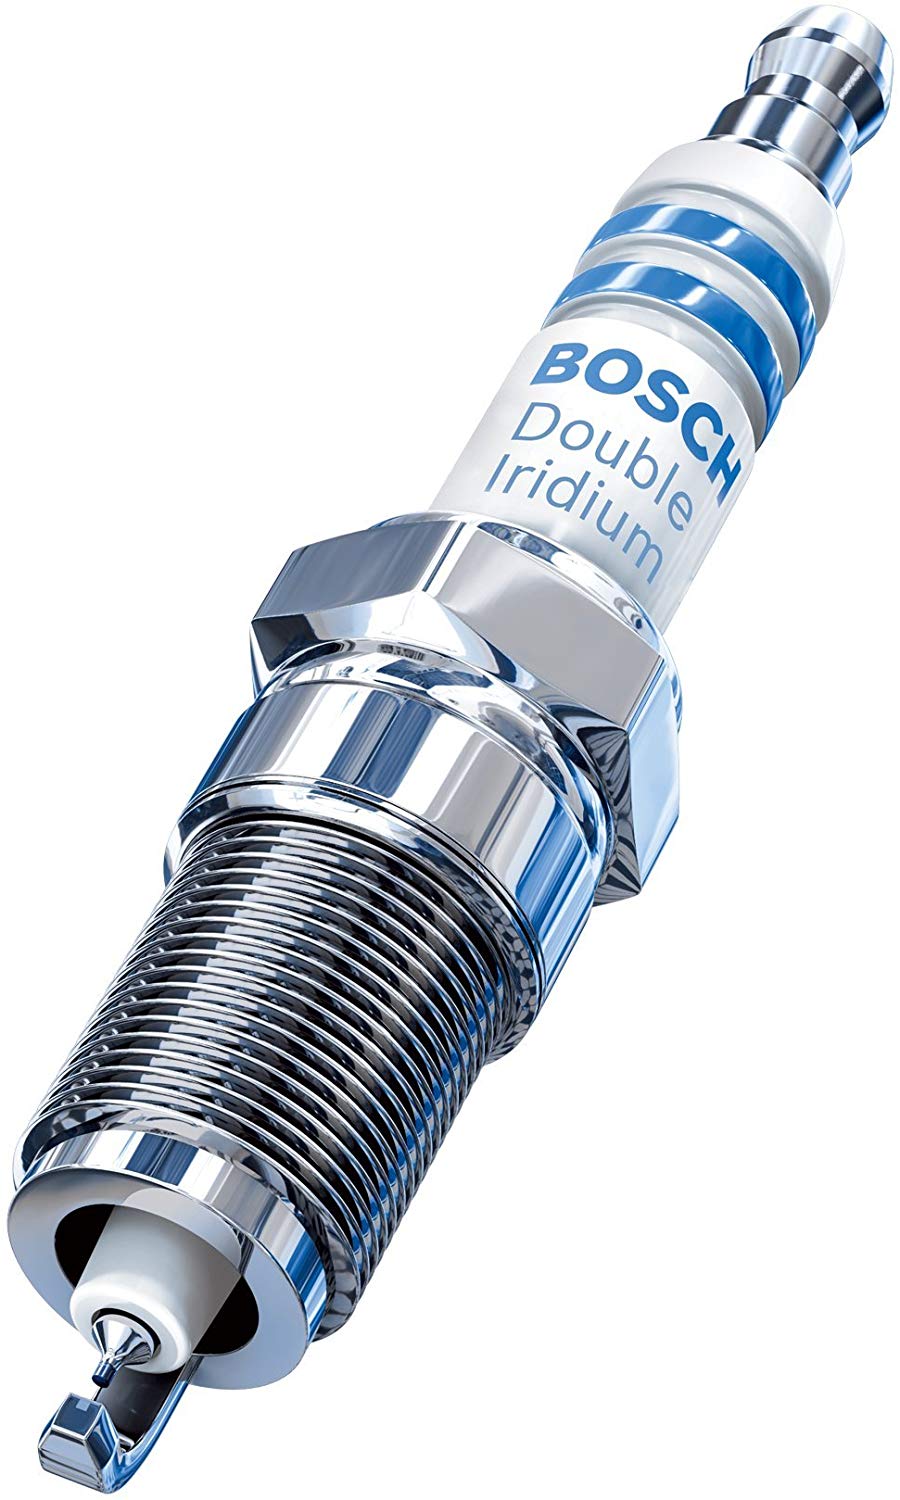 Bosch 9694 Double Iridium OE Replacement Spark Plug Up to 4X Longer Life (4 Pk) Honda Accord, Forester, Impreza, Legacy, Outback, Subaru XV Crosstrek, 4 Pack